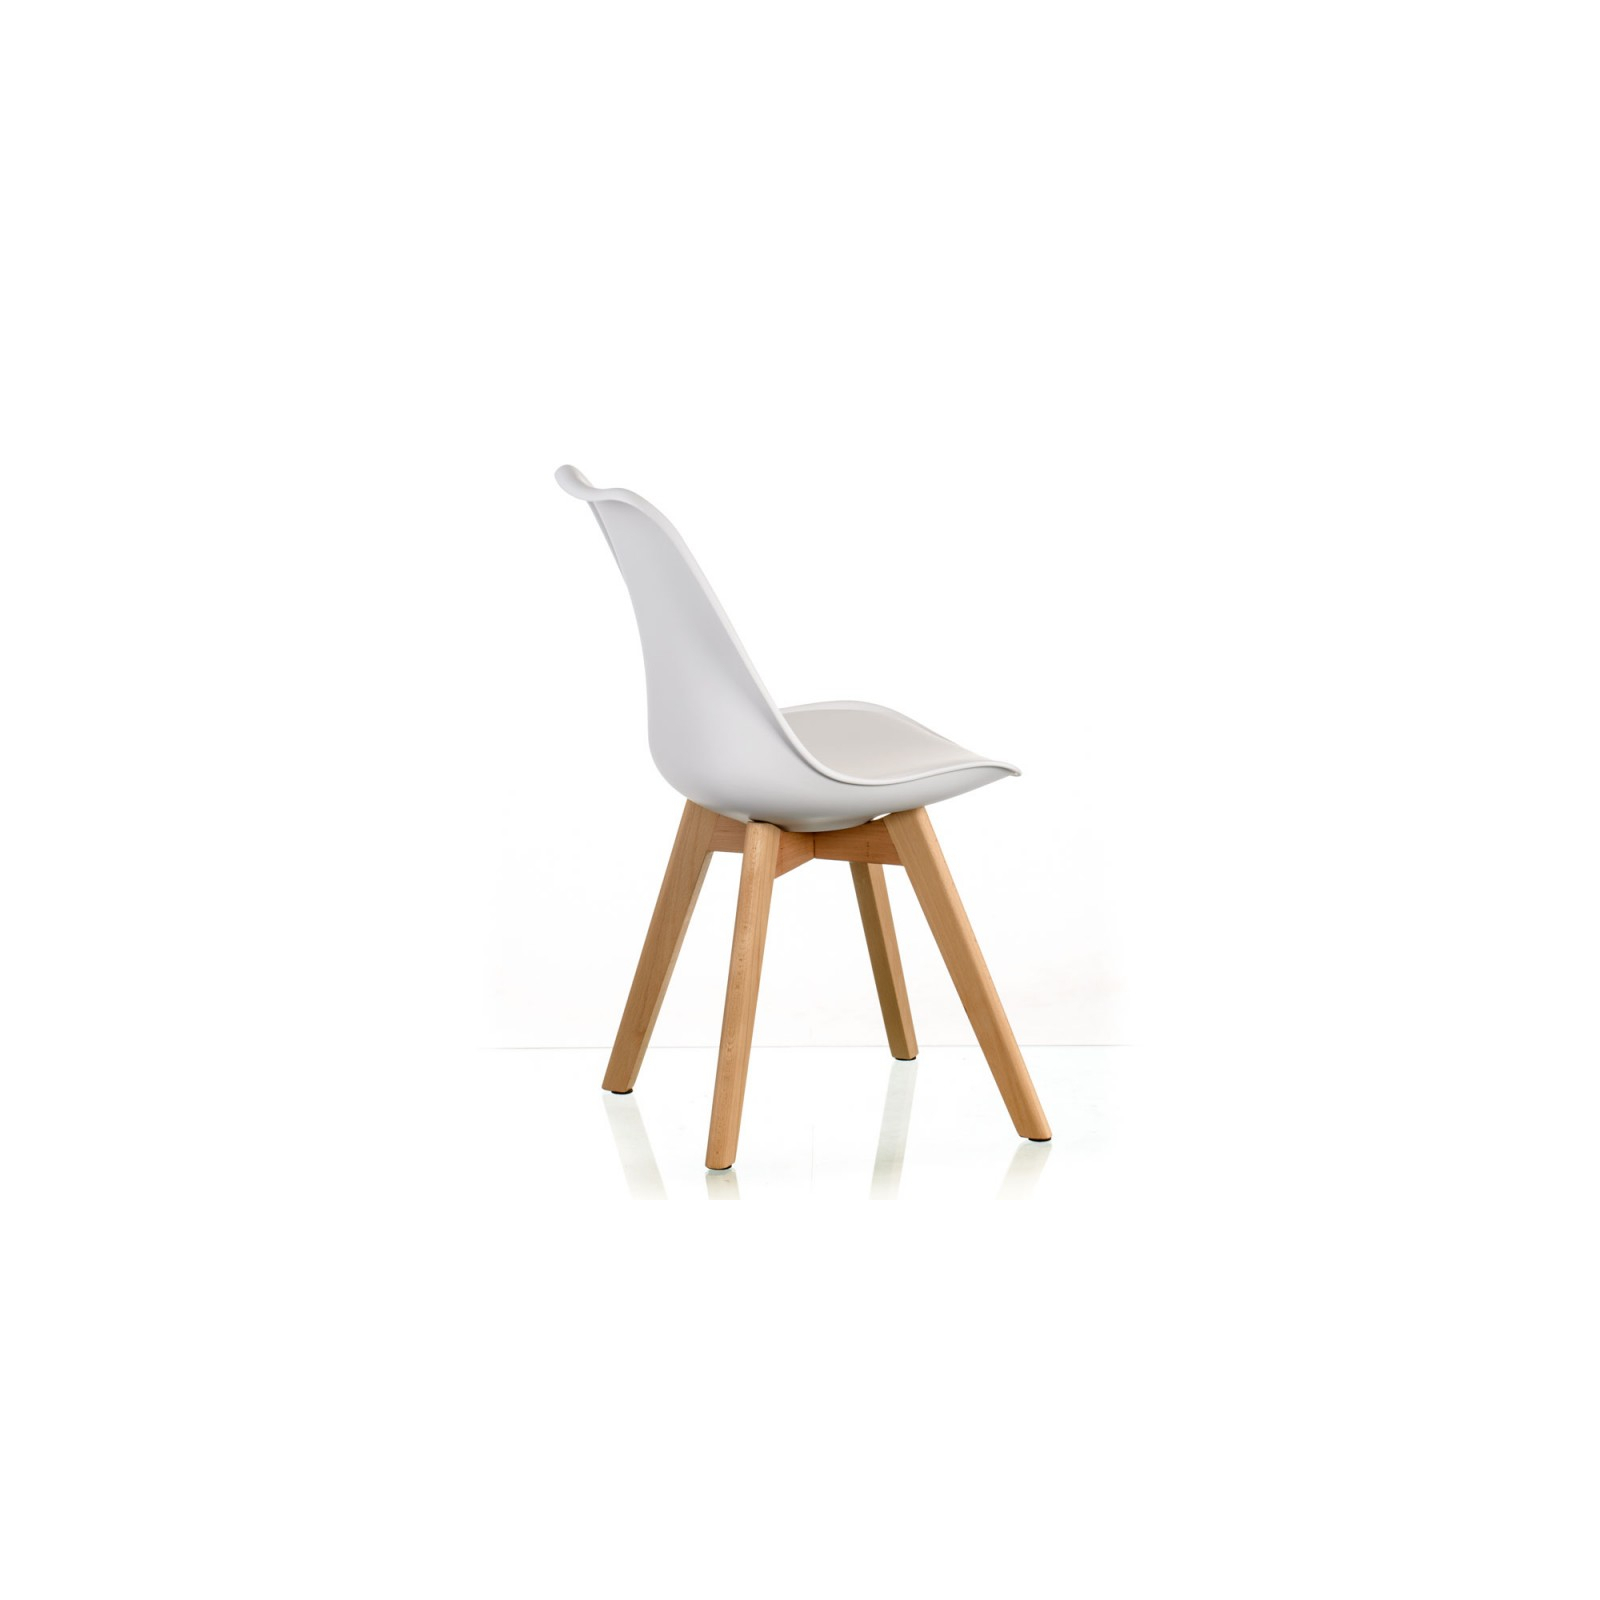 Офисный стул Special4You Sedia white (E5746) изображение 6